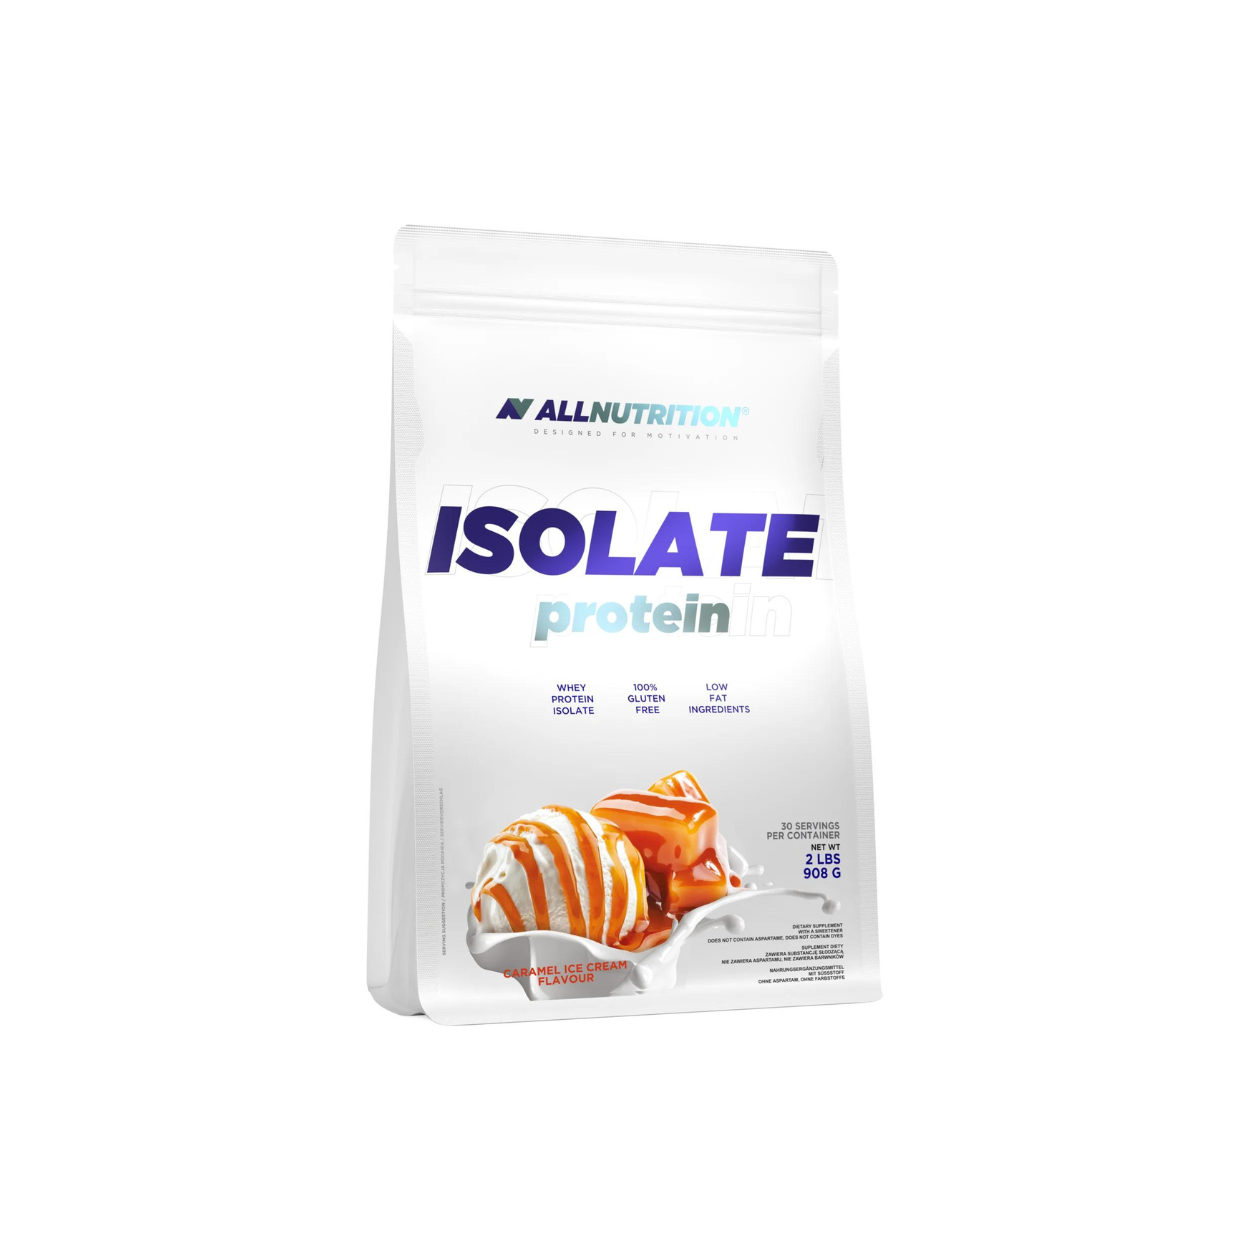 Allnutrition Isolate Protein Caramel Ice Cream (908g)